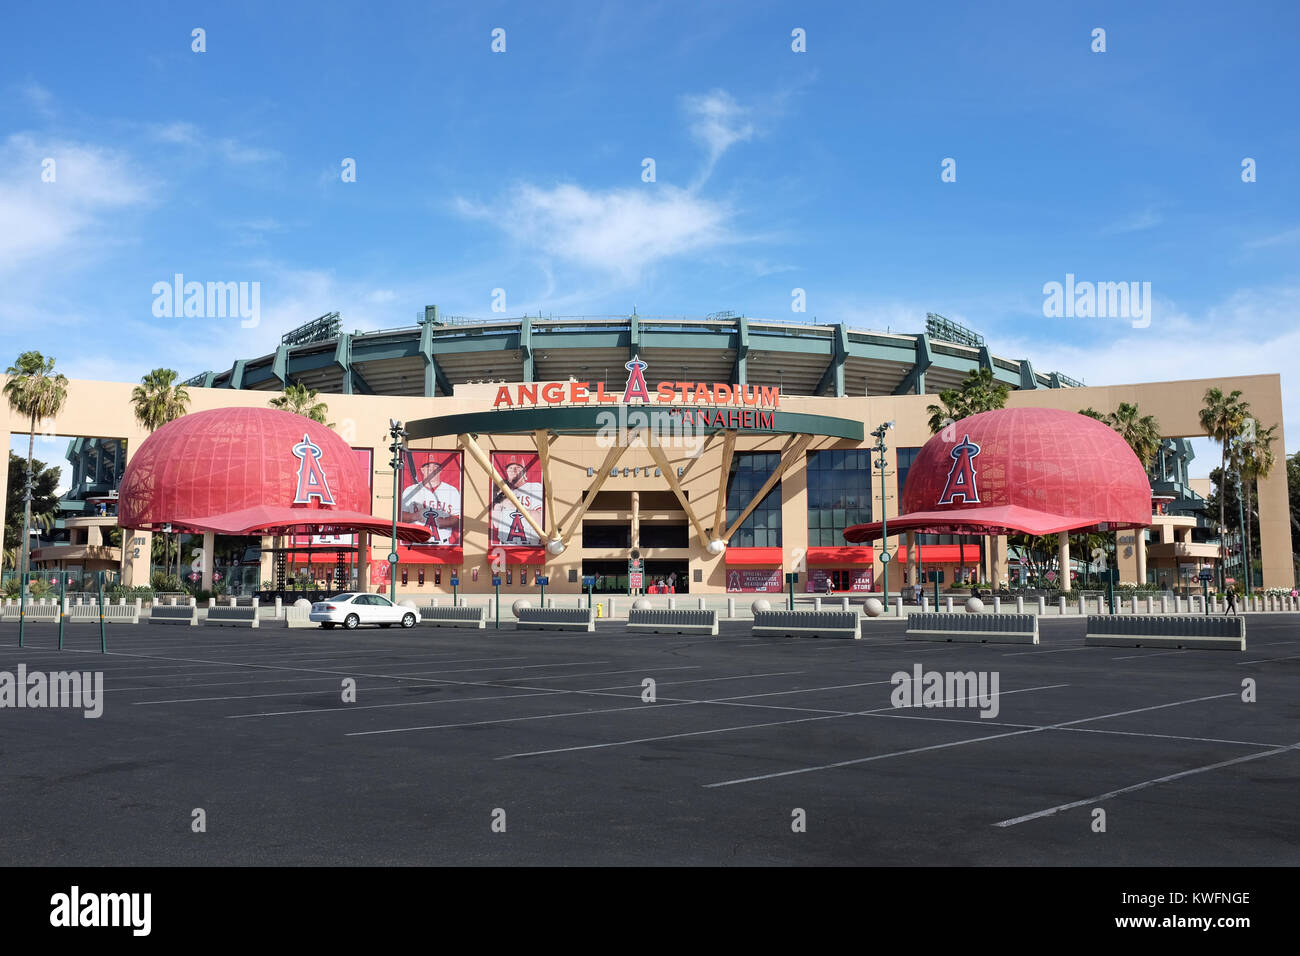 ANAHEIM, Ca - 11. FEBRUAR 2015: Angel Stadium von Anaheim Haupteingang. Angel Stadium von Anaheim ist die Major League Baseball (MLB) home home Feld o Stockfoto